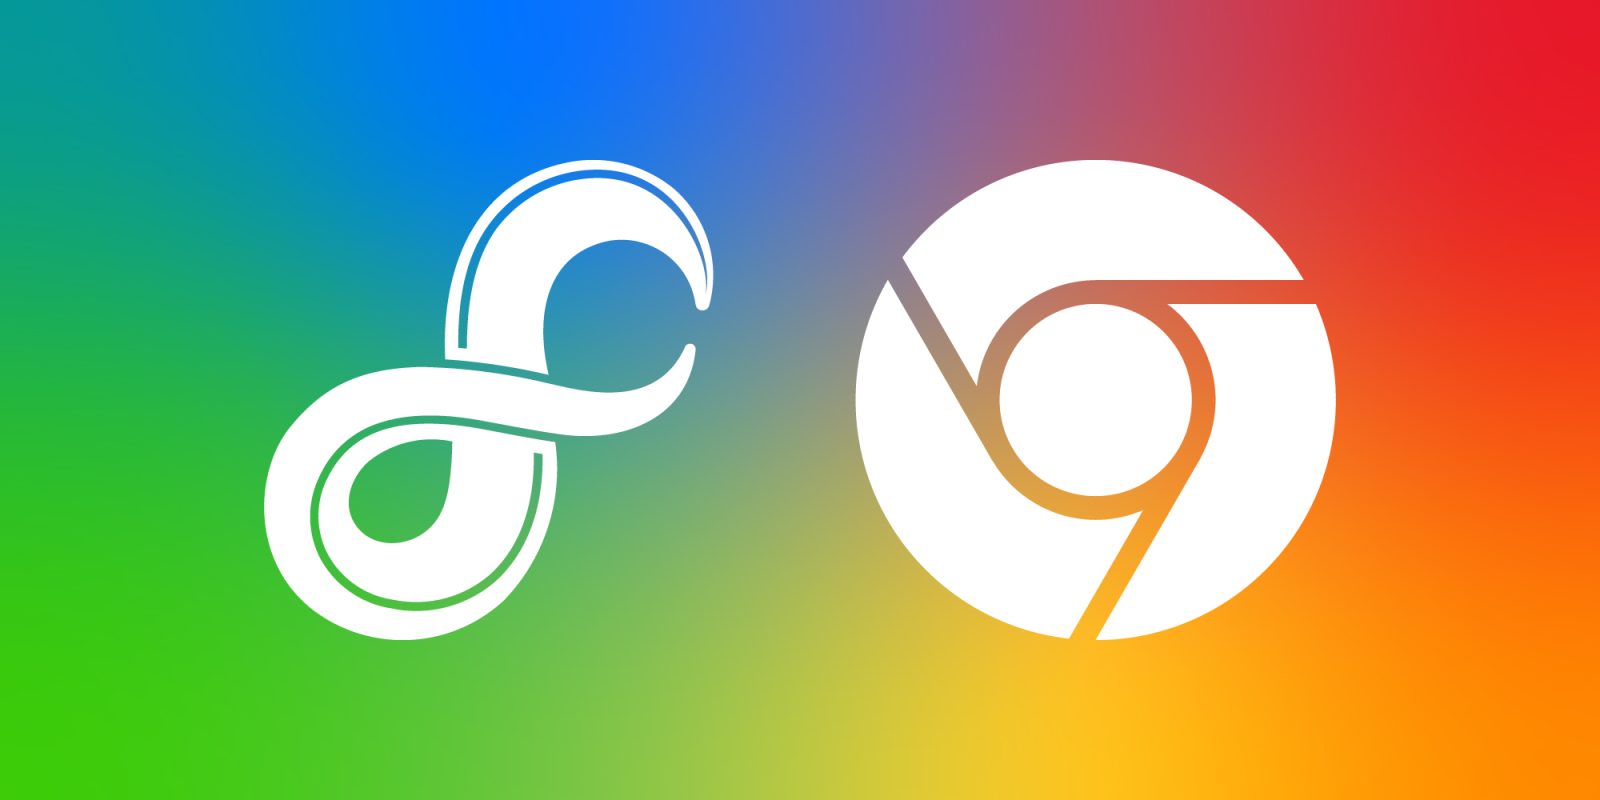 Logos for Fuchsia OS and Google Chrome